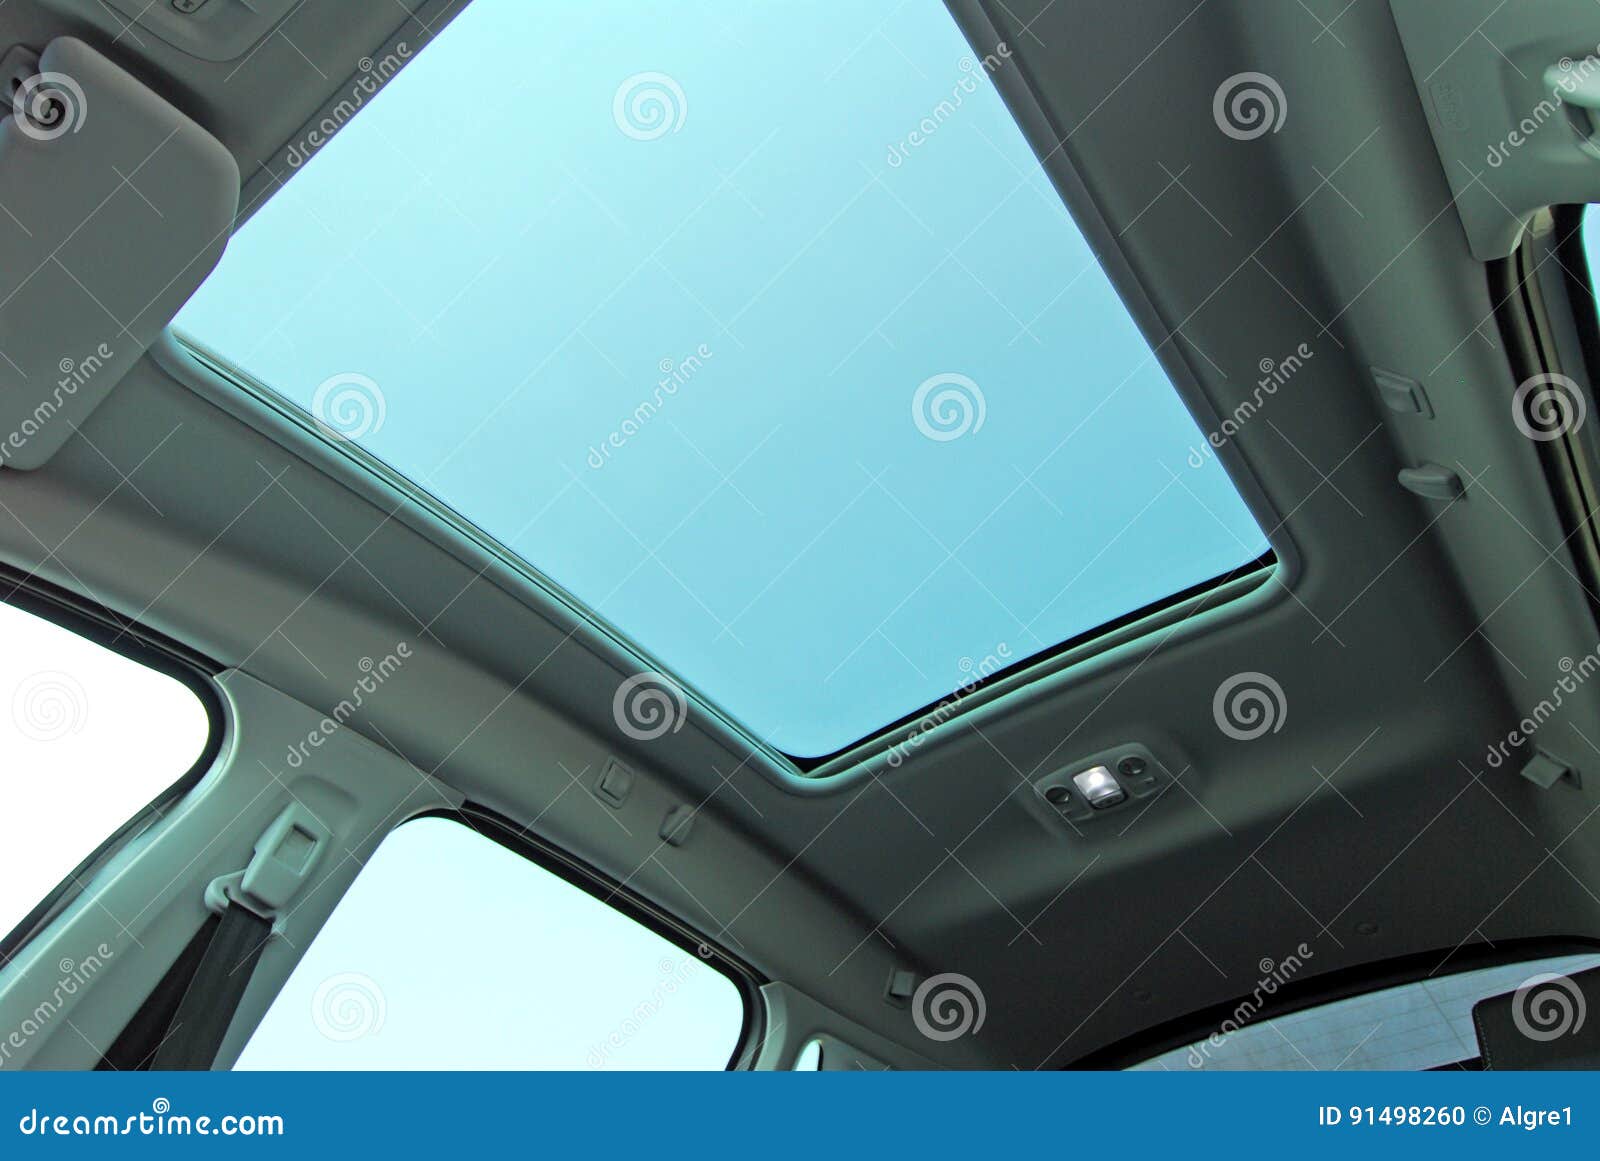 car sunroof